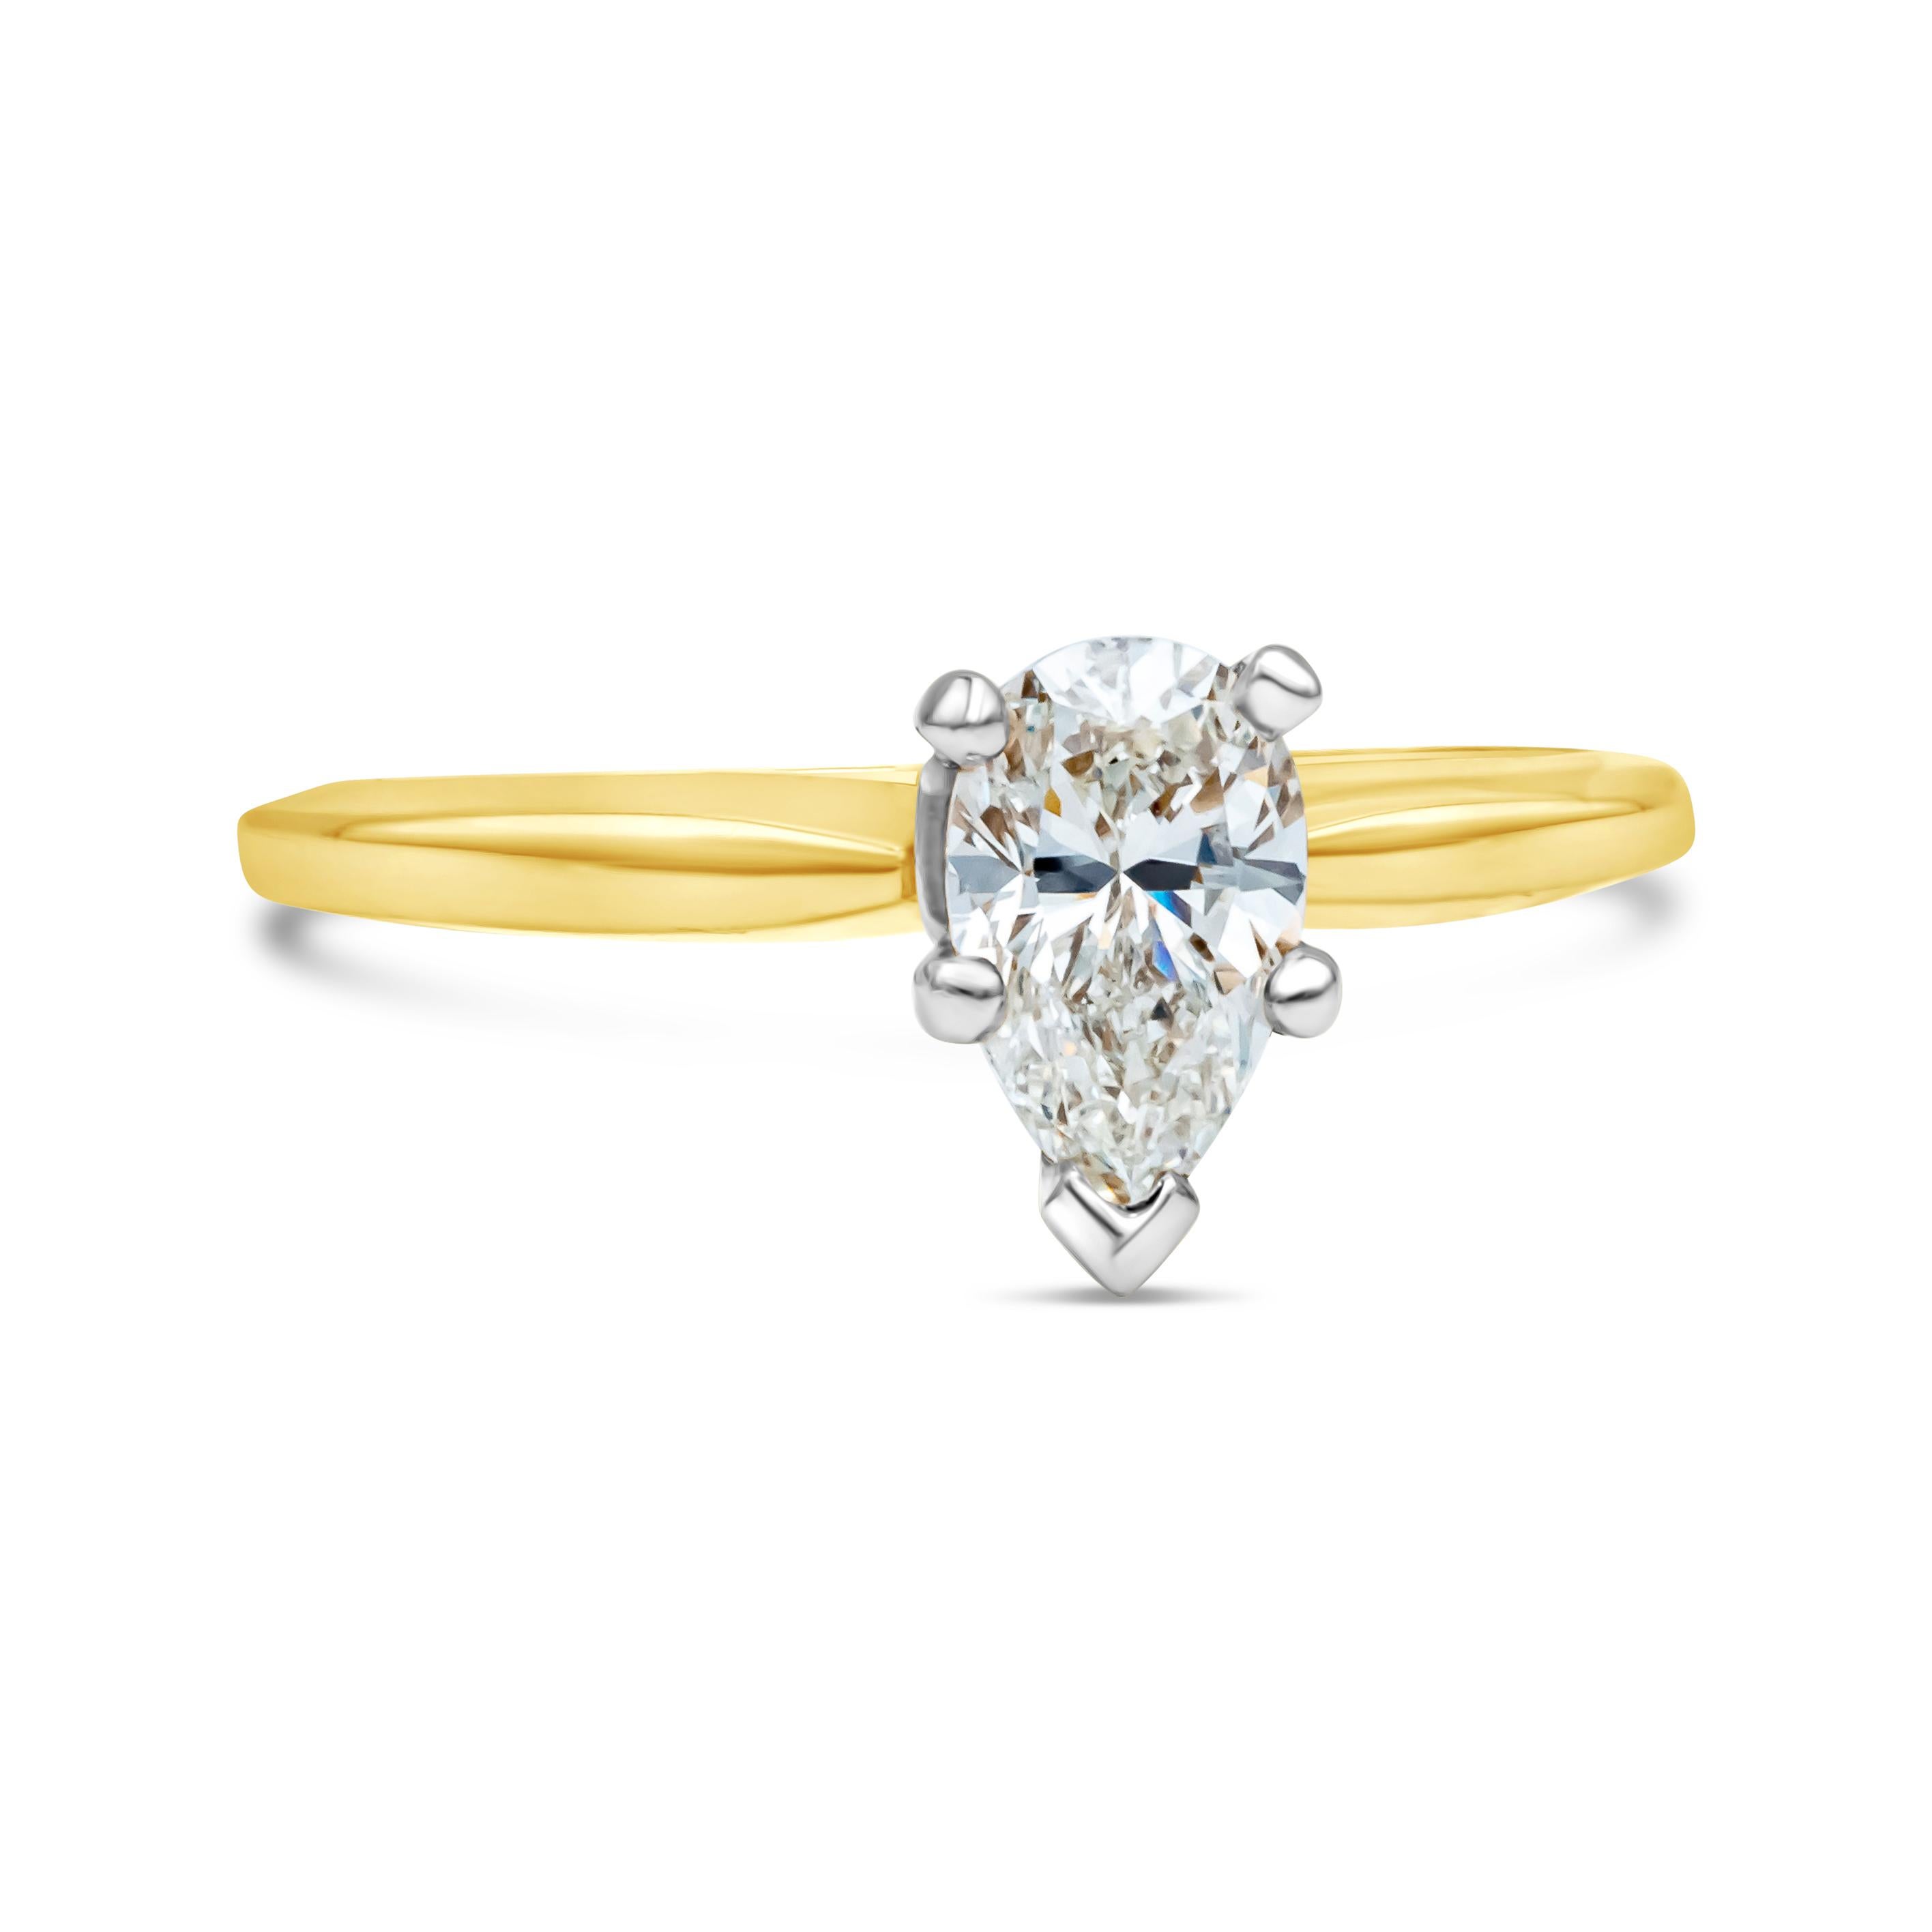 2 carat pear shaped diamond ring